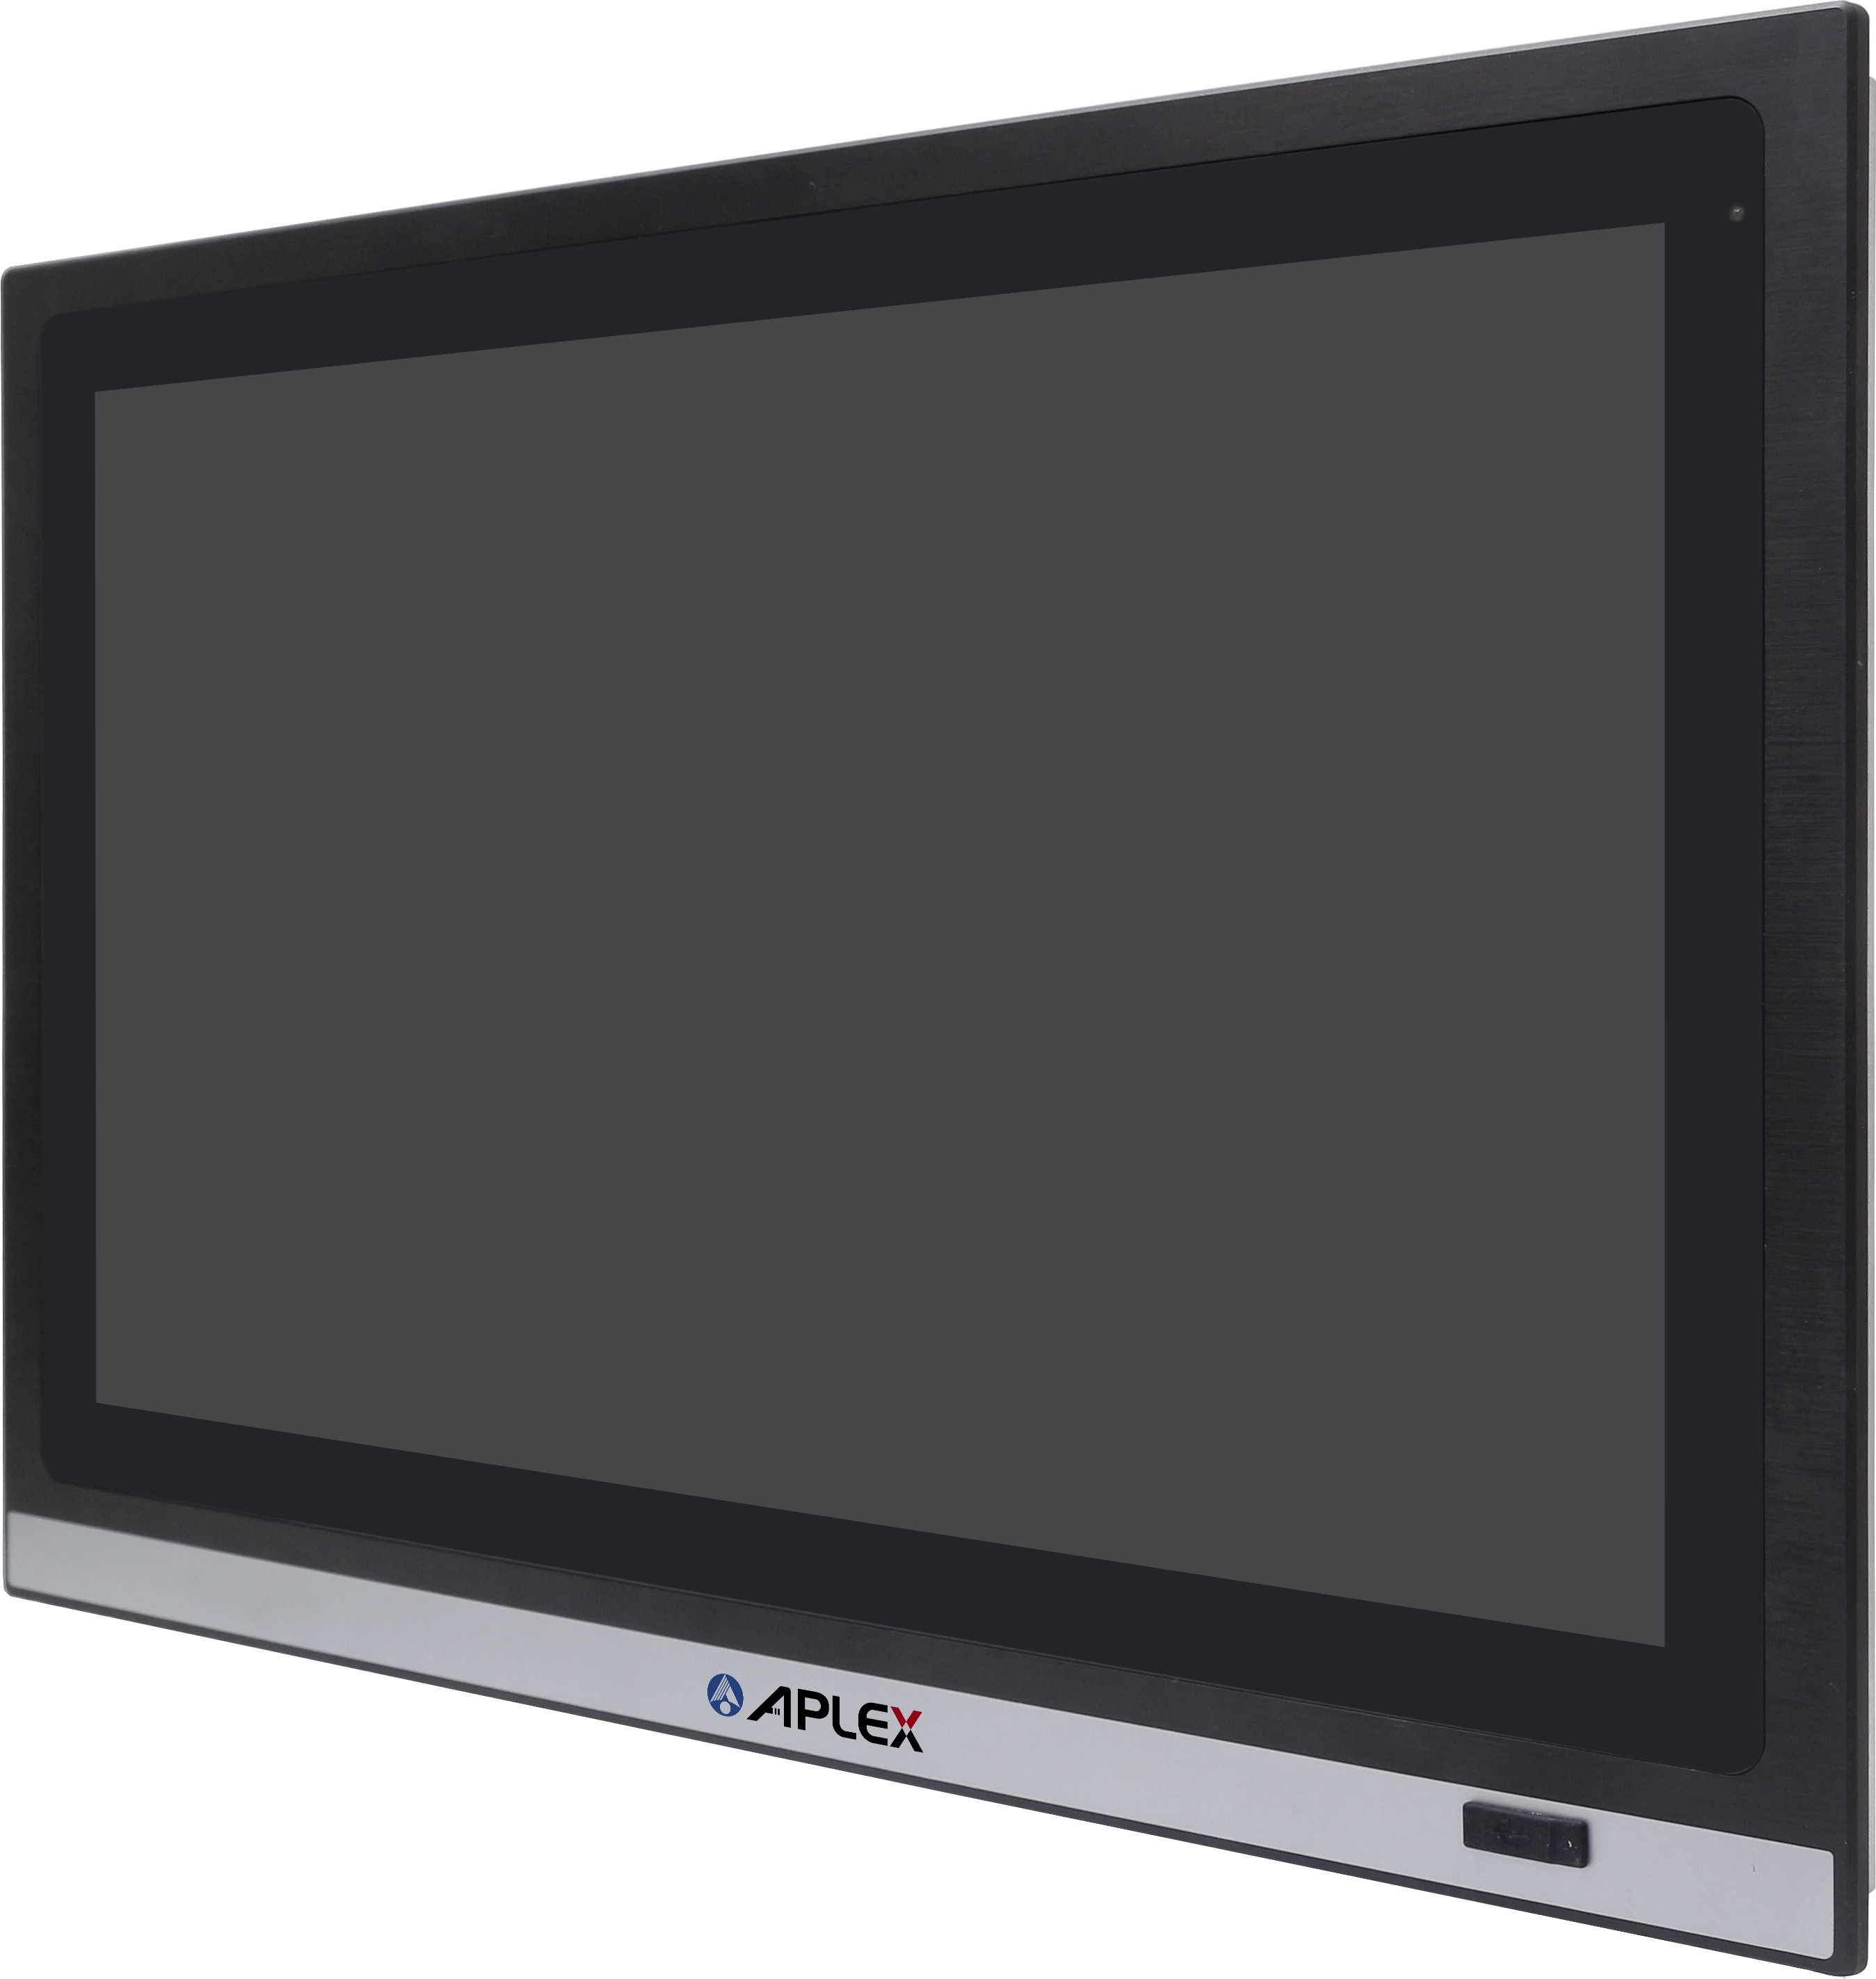 Industrial panel PC / APLEX Technology Inc.